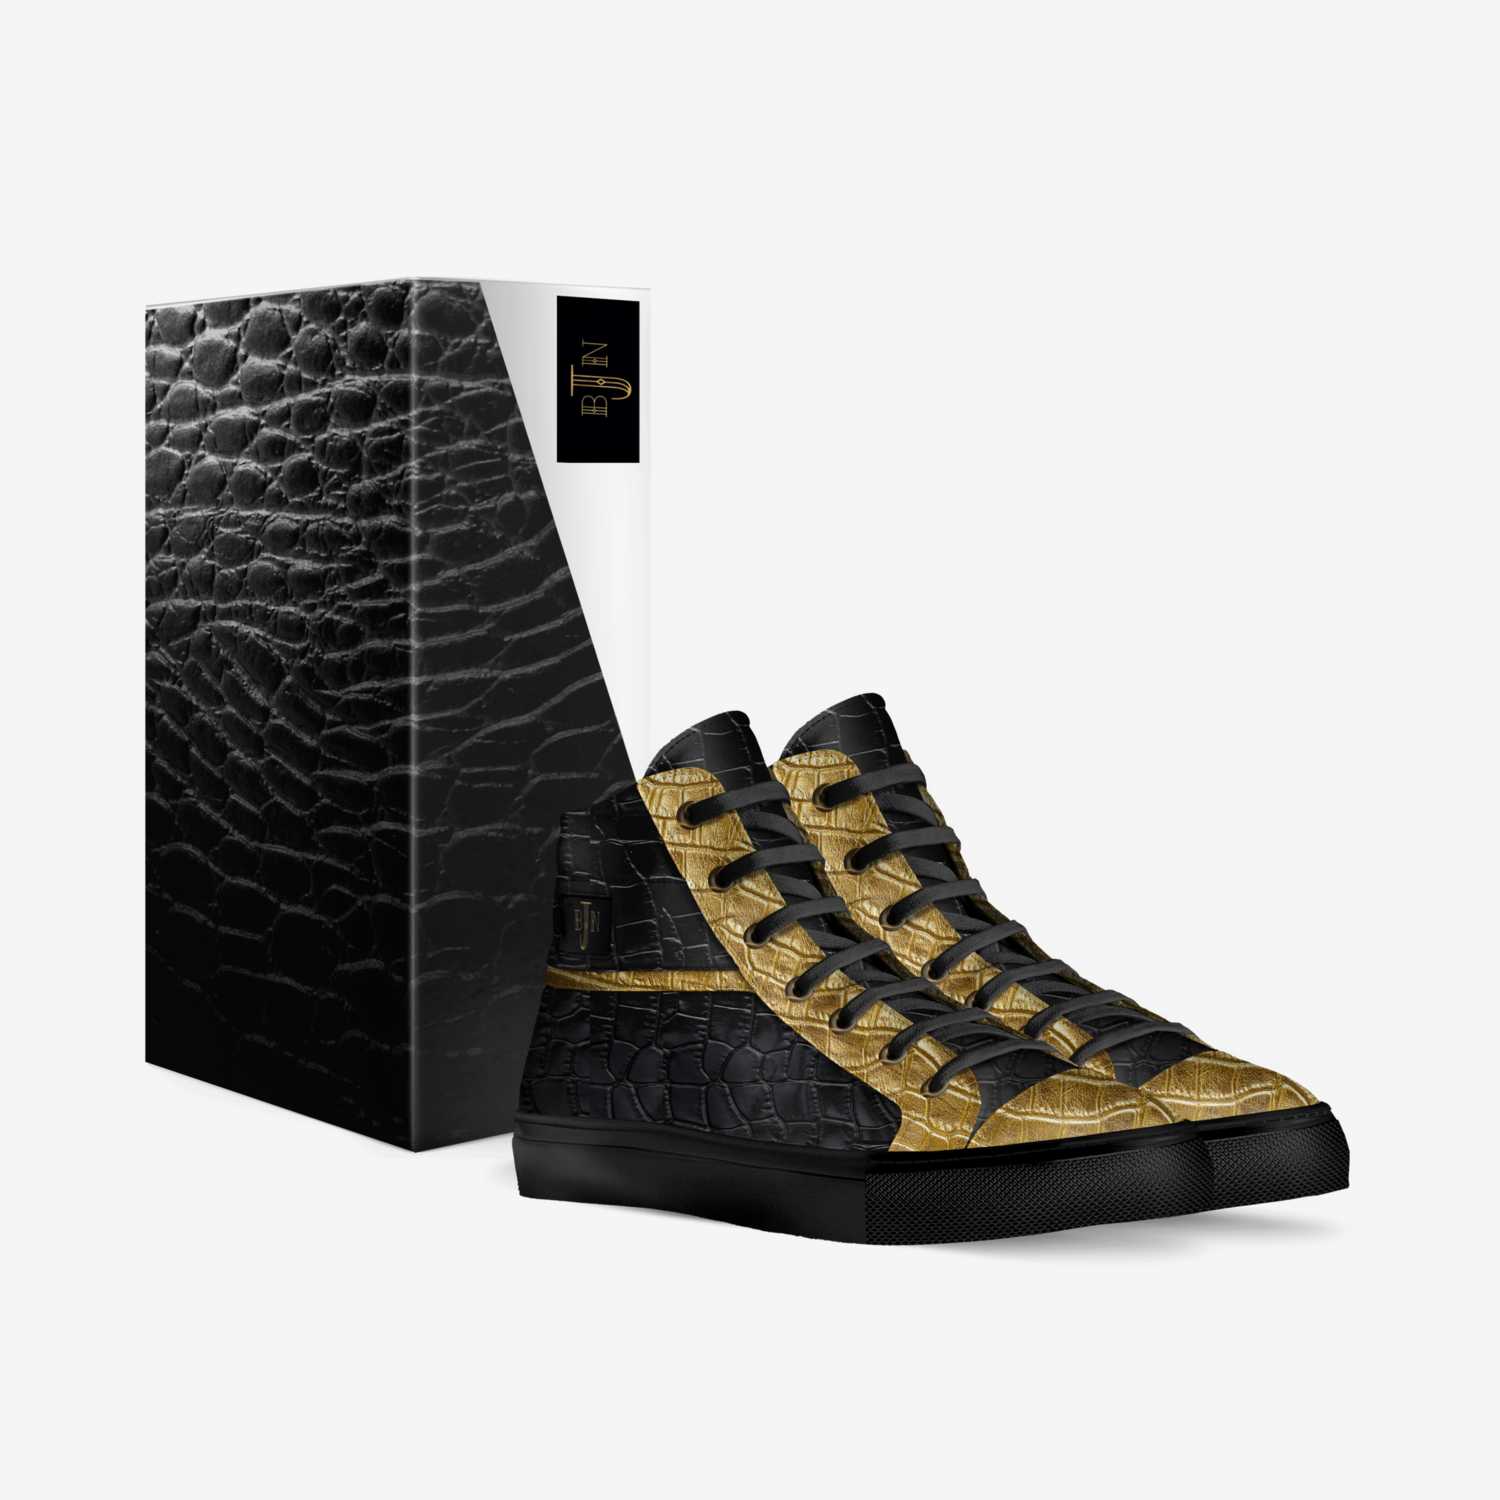 SPËCTRÜM custom made in Italy shoes by Monique Gabriel | Box view